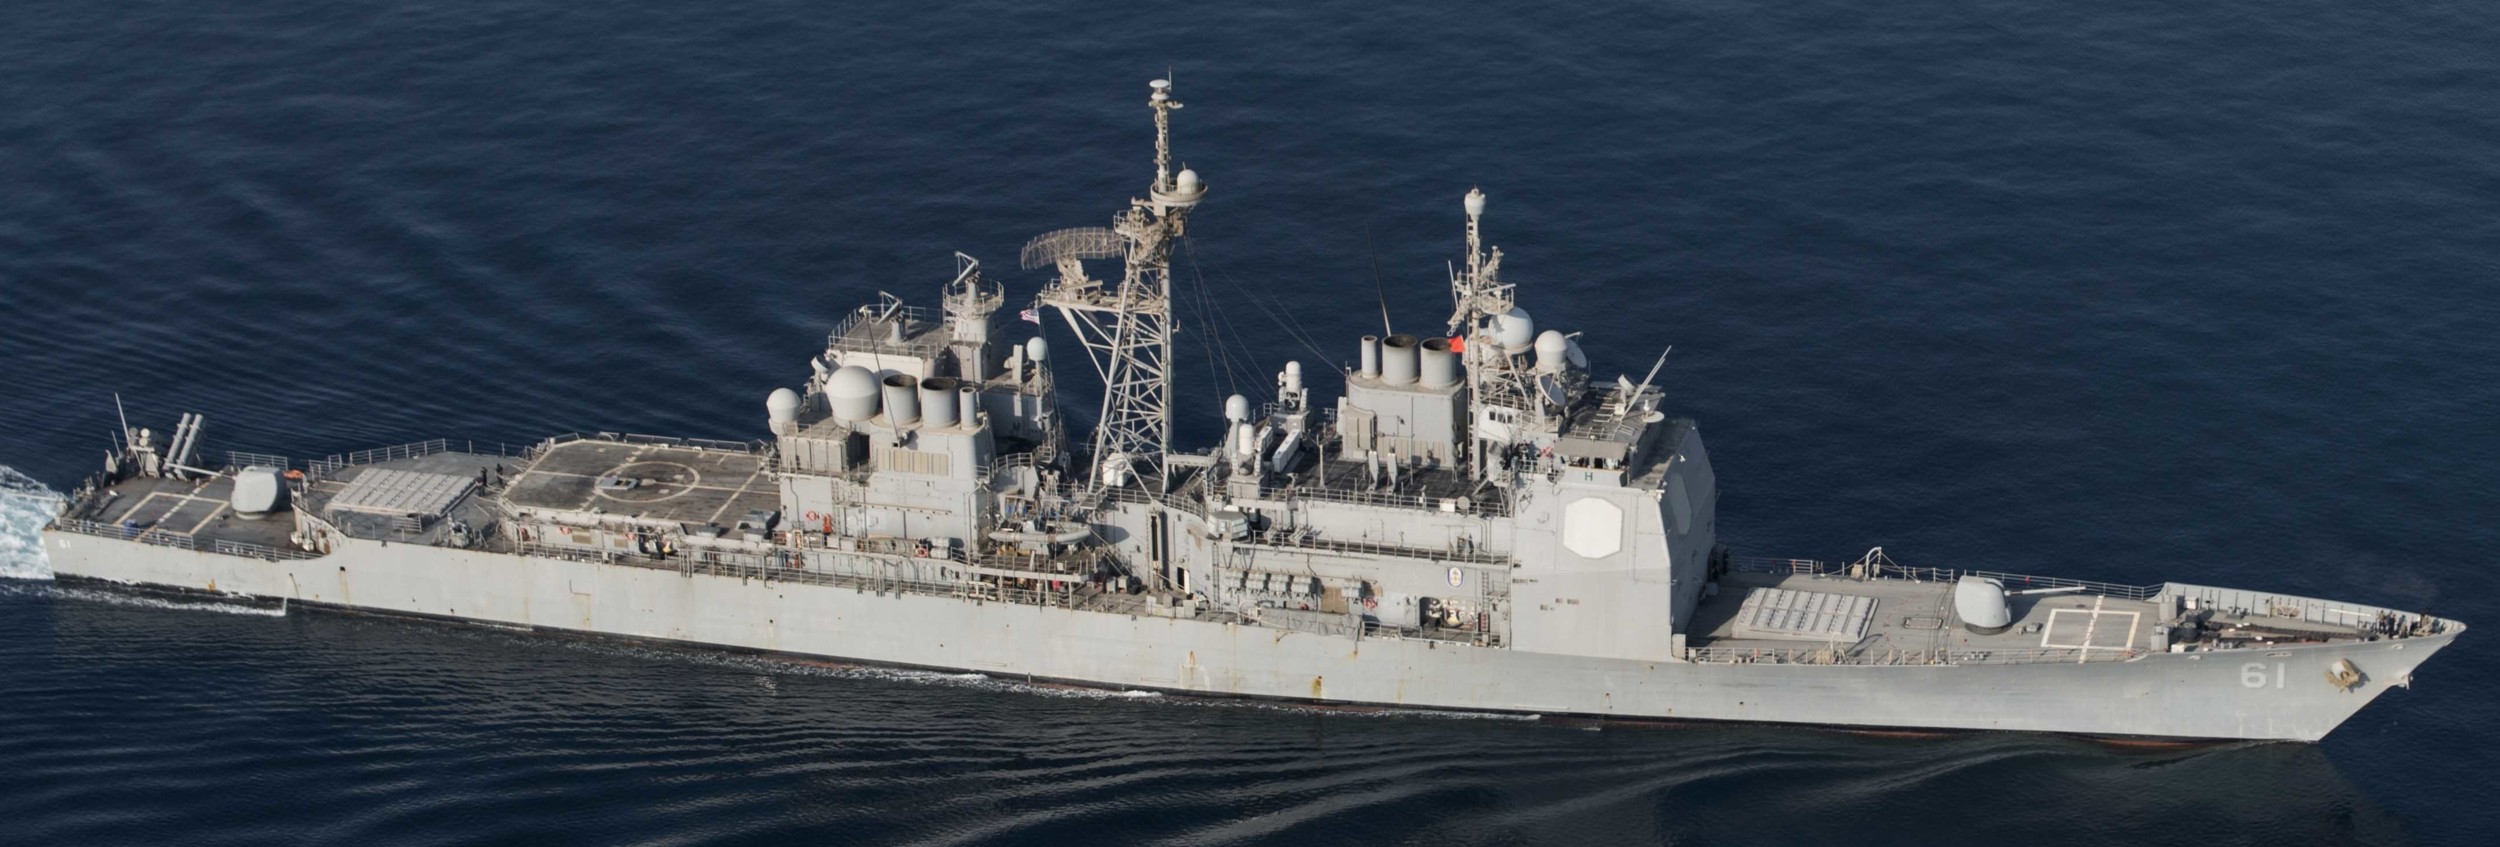 cg-56 uss san jacinto ticonderoga class guided missile cruiser aegis us navy 77